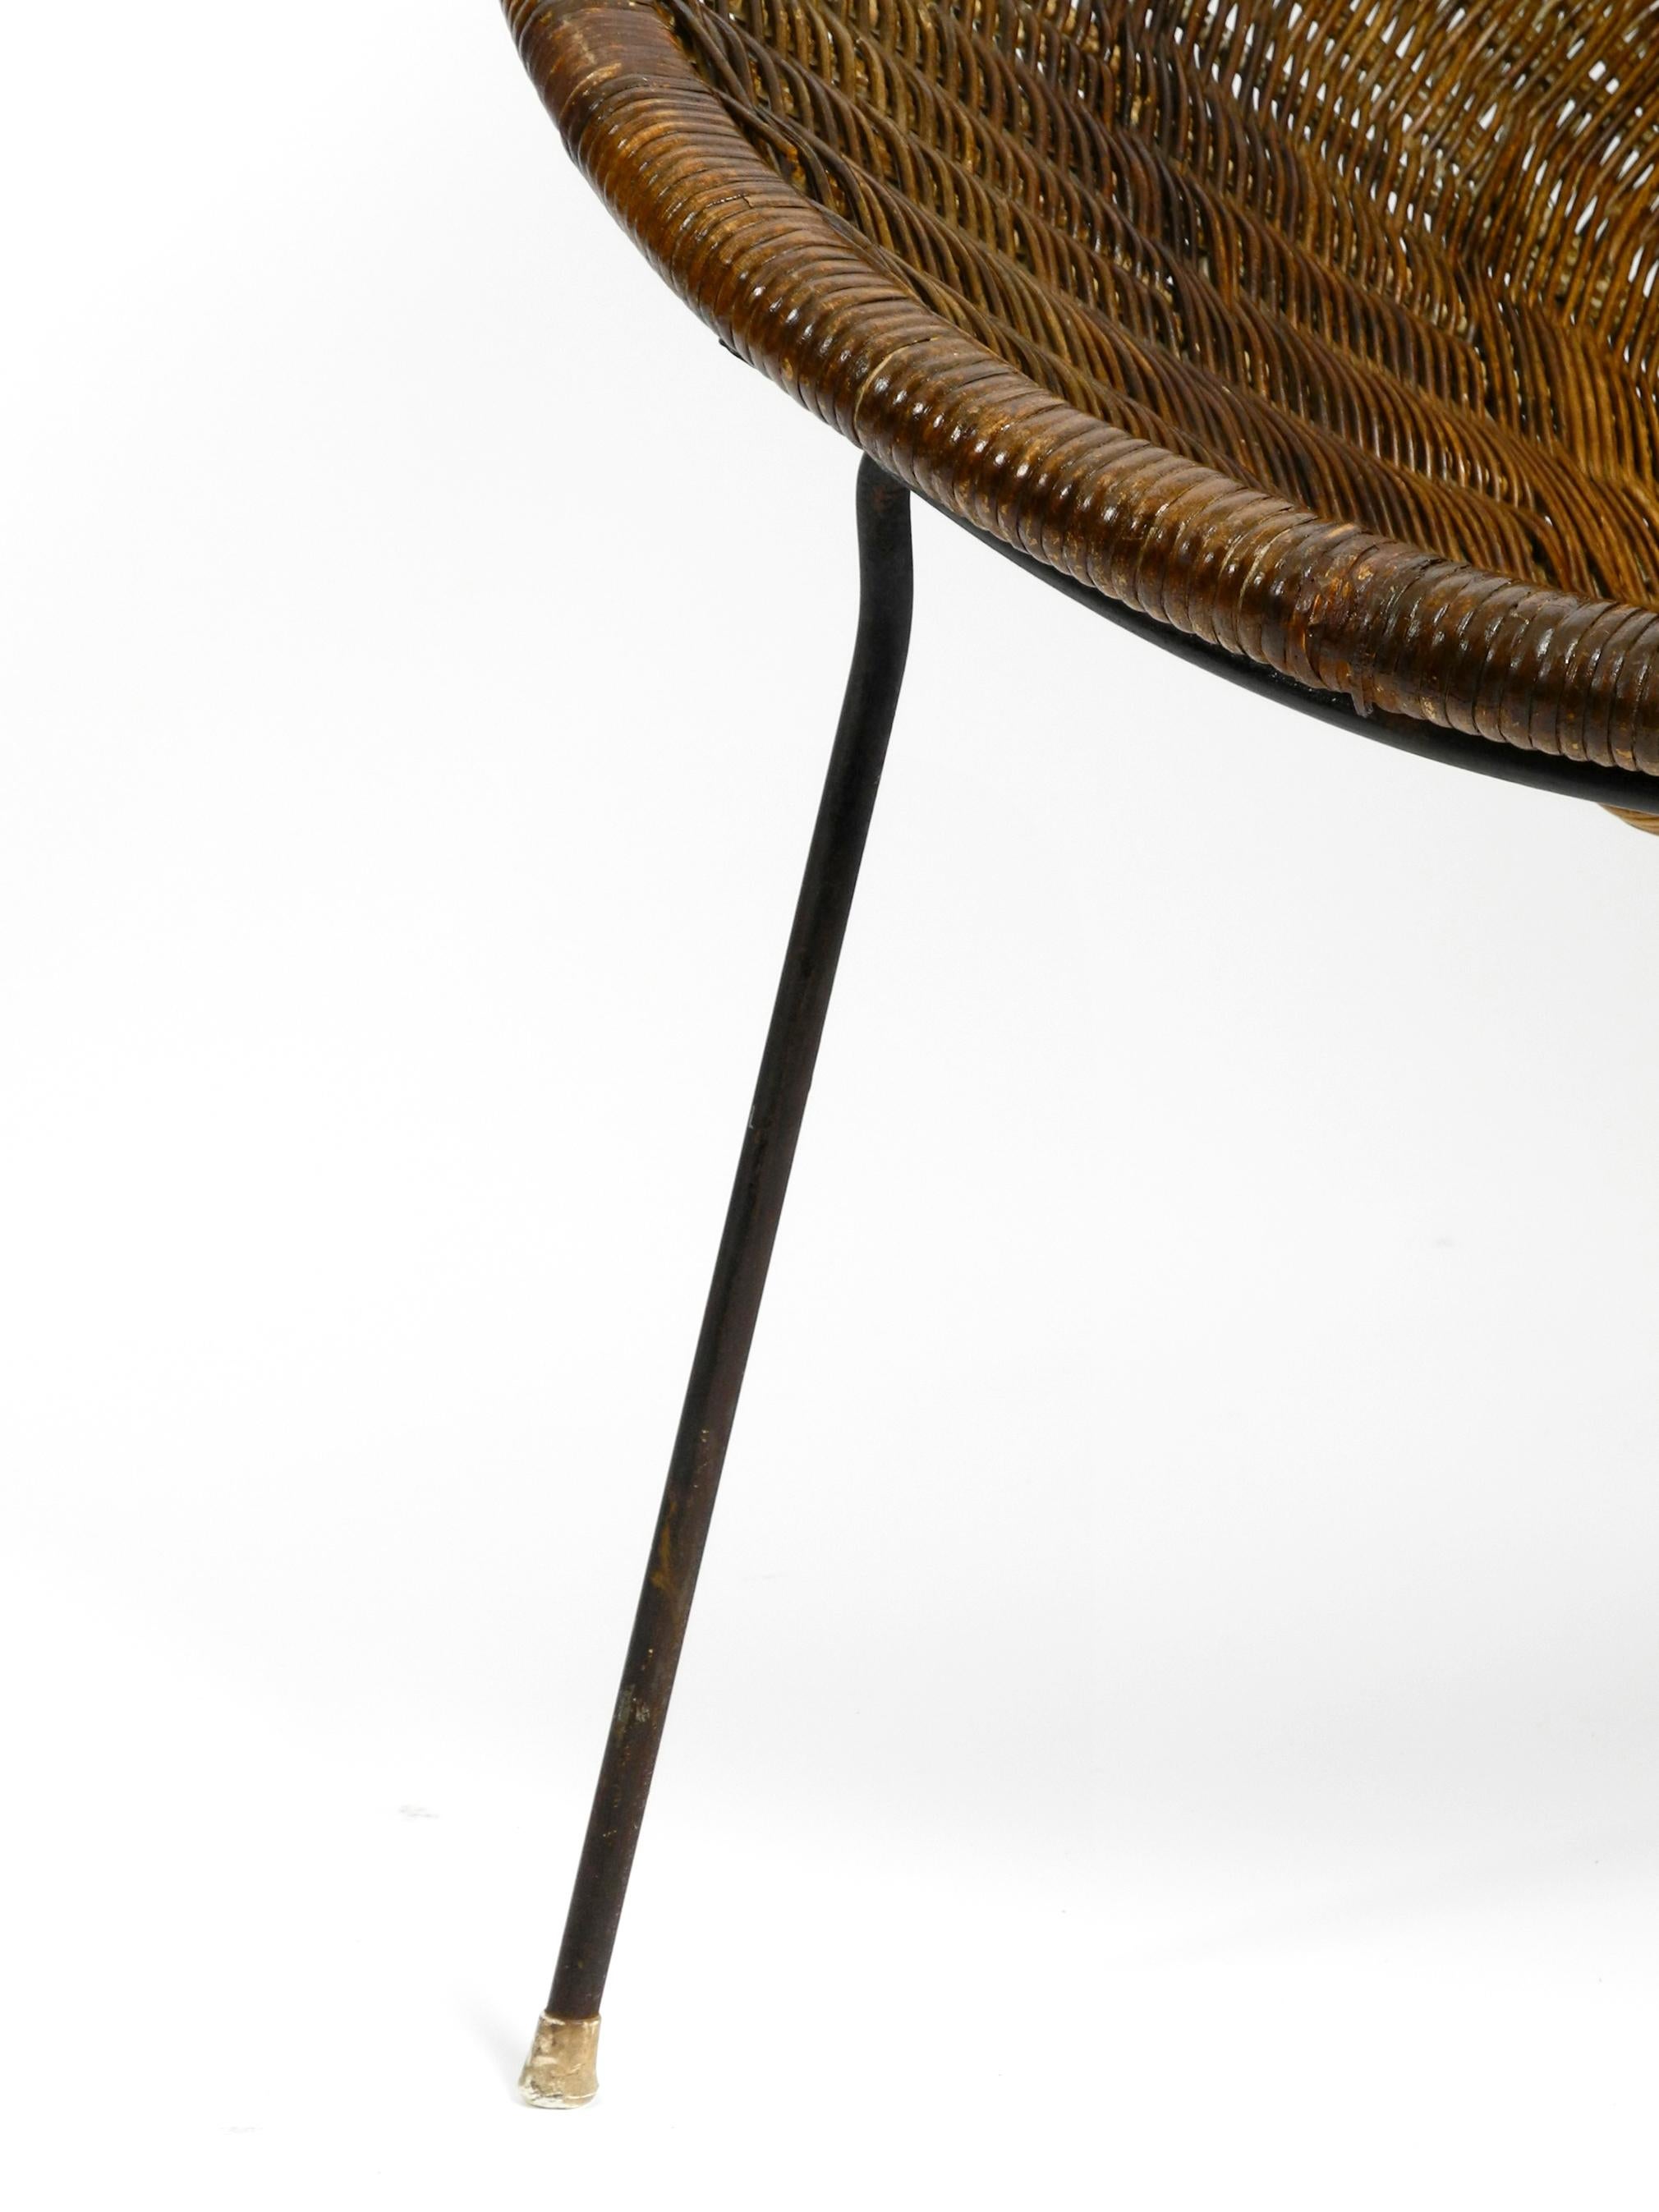 Italian Tripod Mid Century Lounge Basket Chair Made of Wicker by Roberto Mango 15